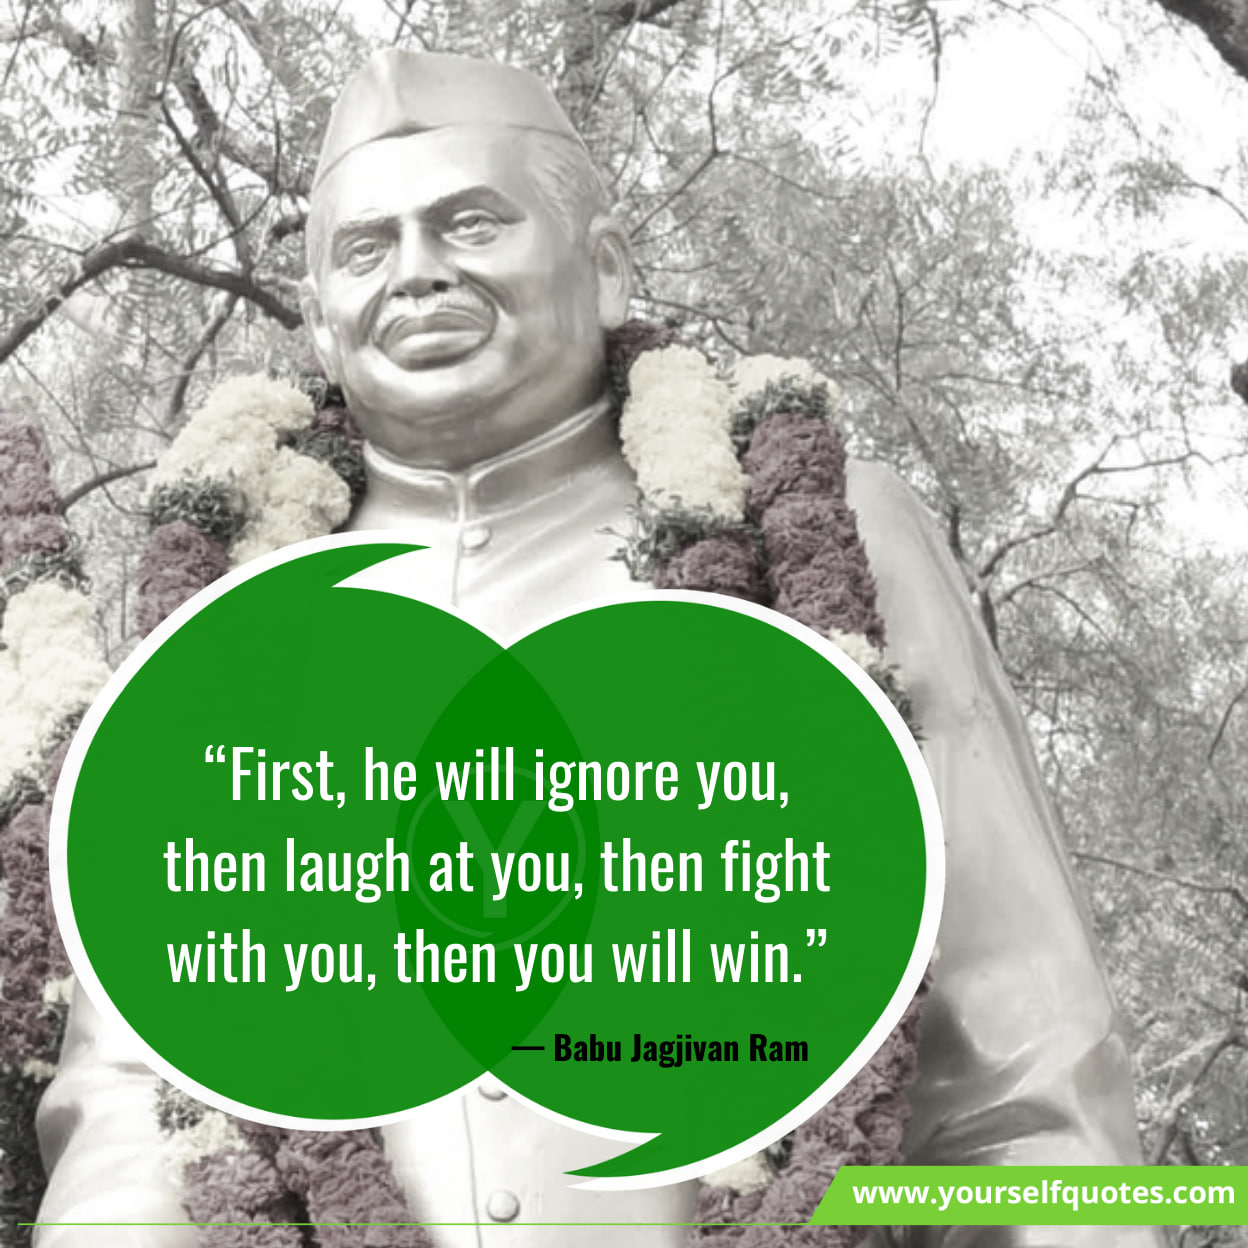 Inspirational Quotes On Babu Jagjivan Ram Jayanti